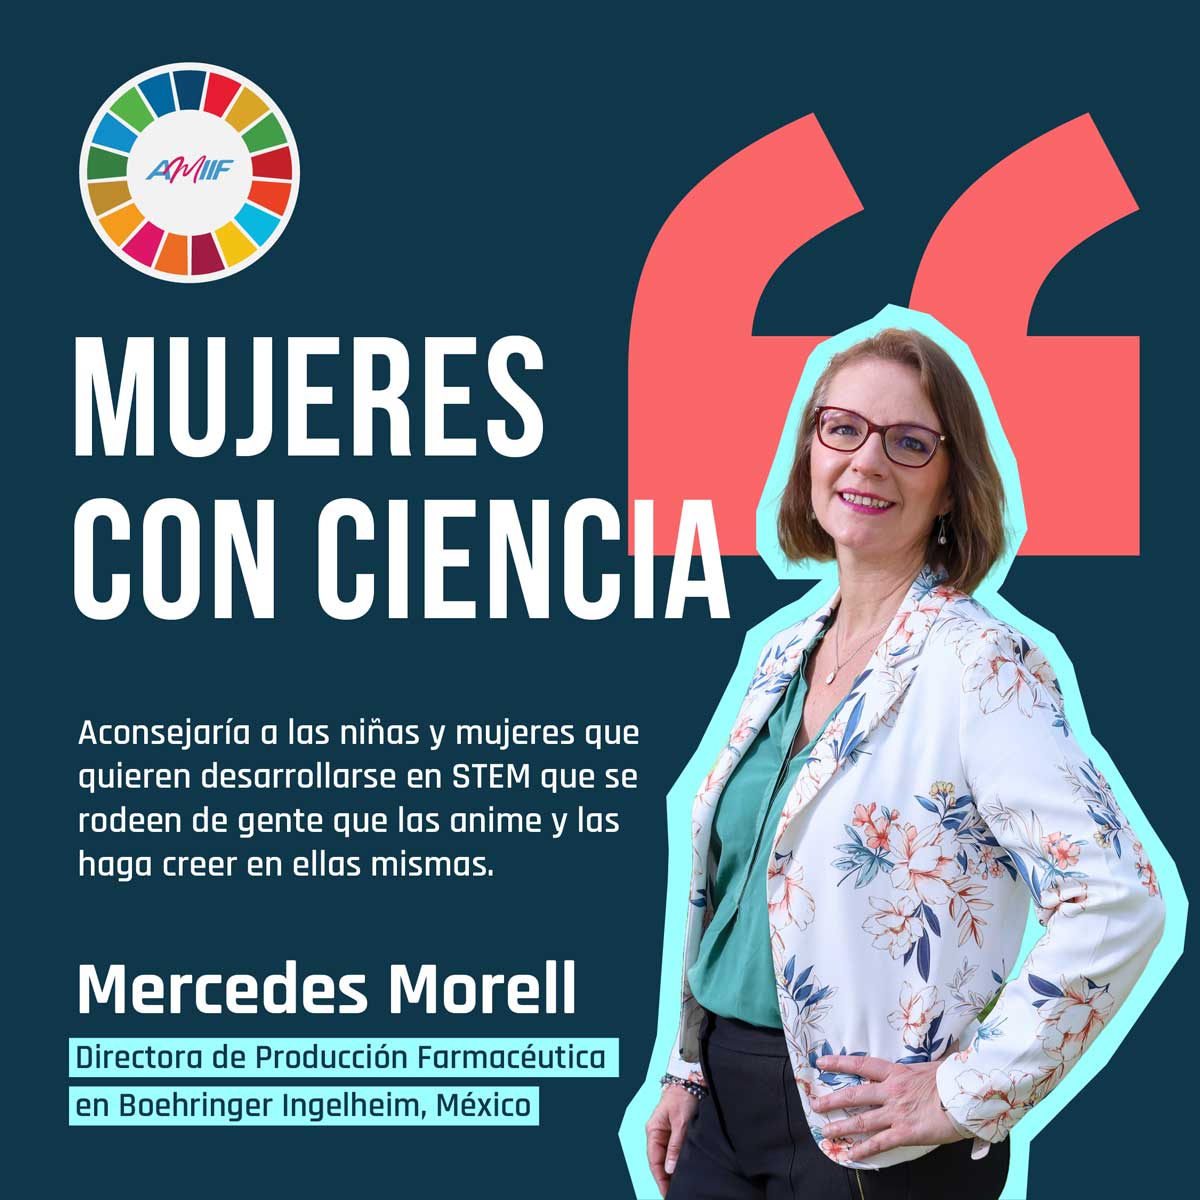 Mercedes Morell